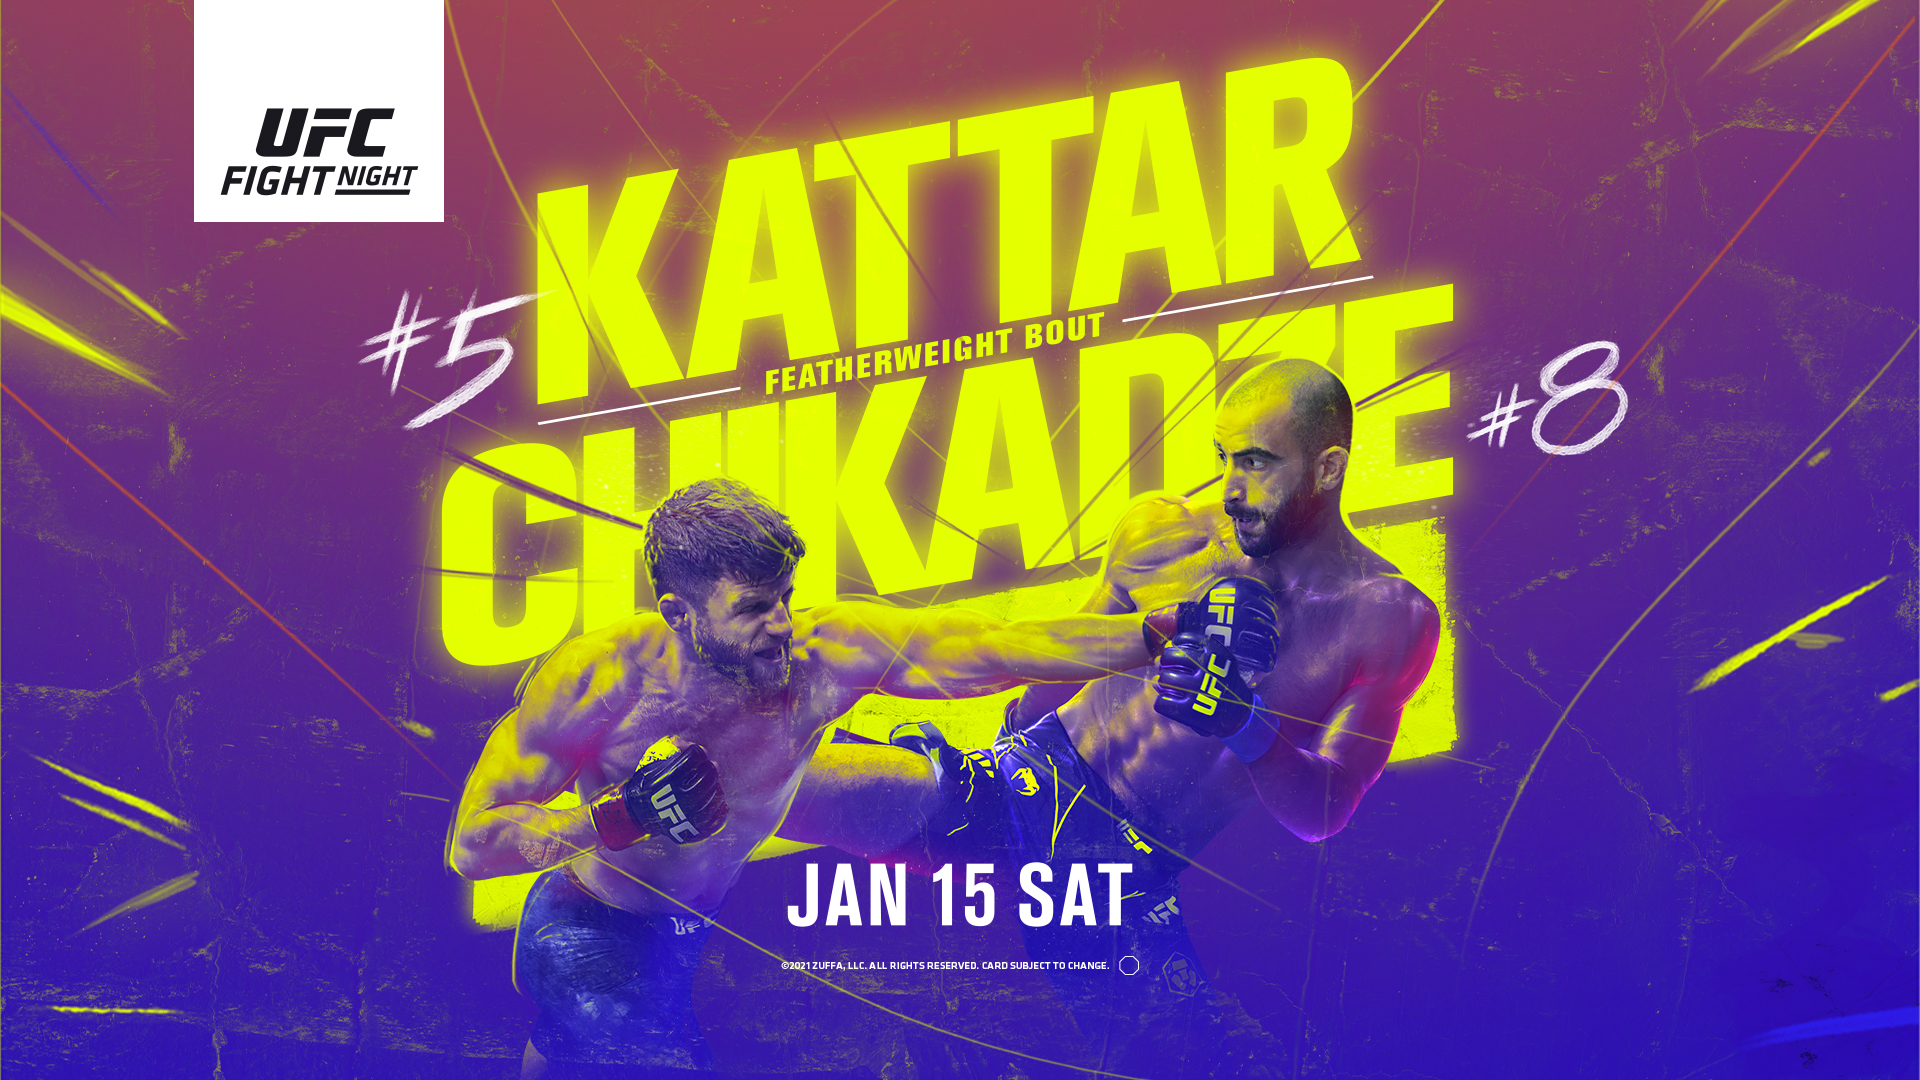 UFC Fight Night Kattar Vs Chikadze How to watch, start time and full fight card